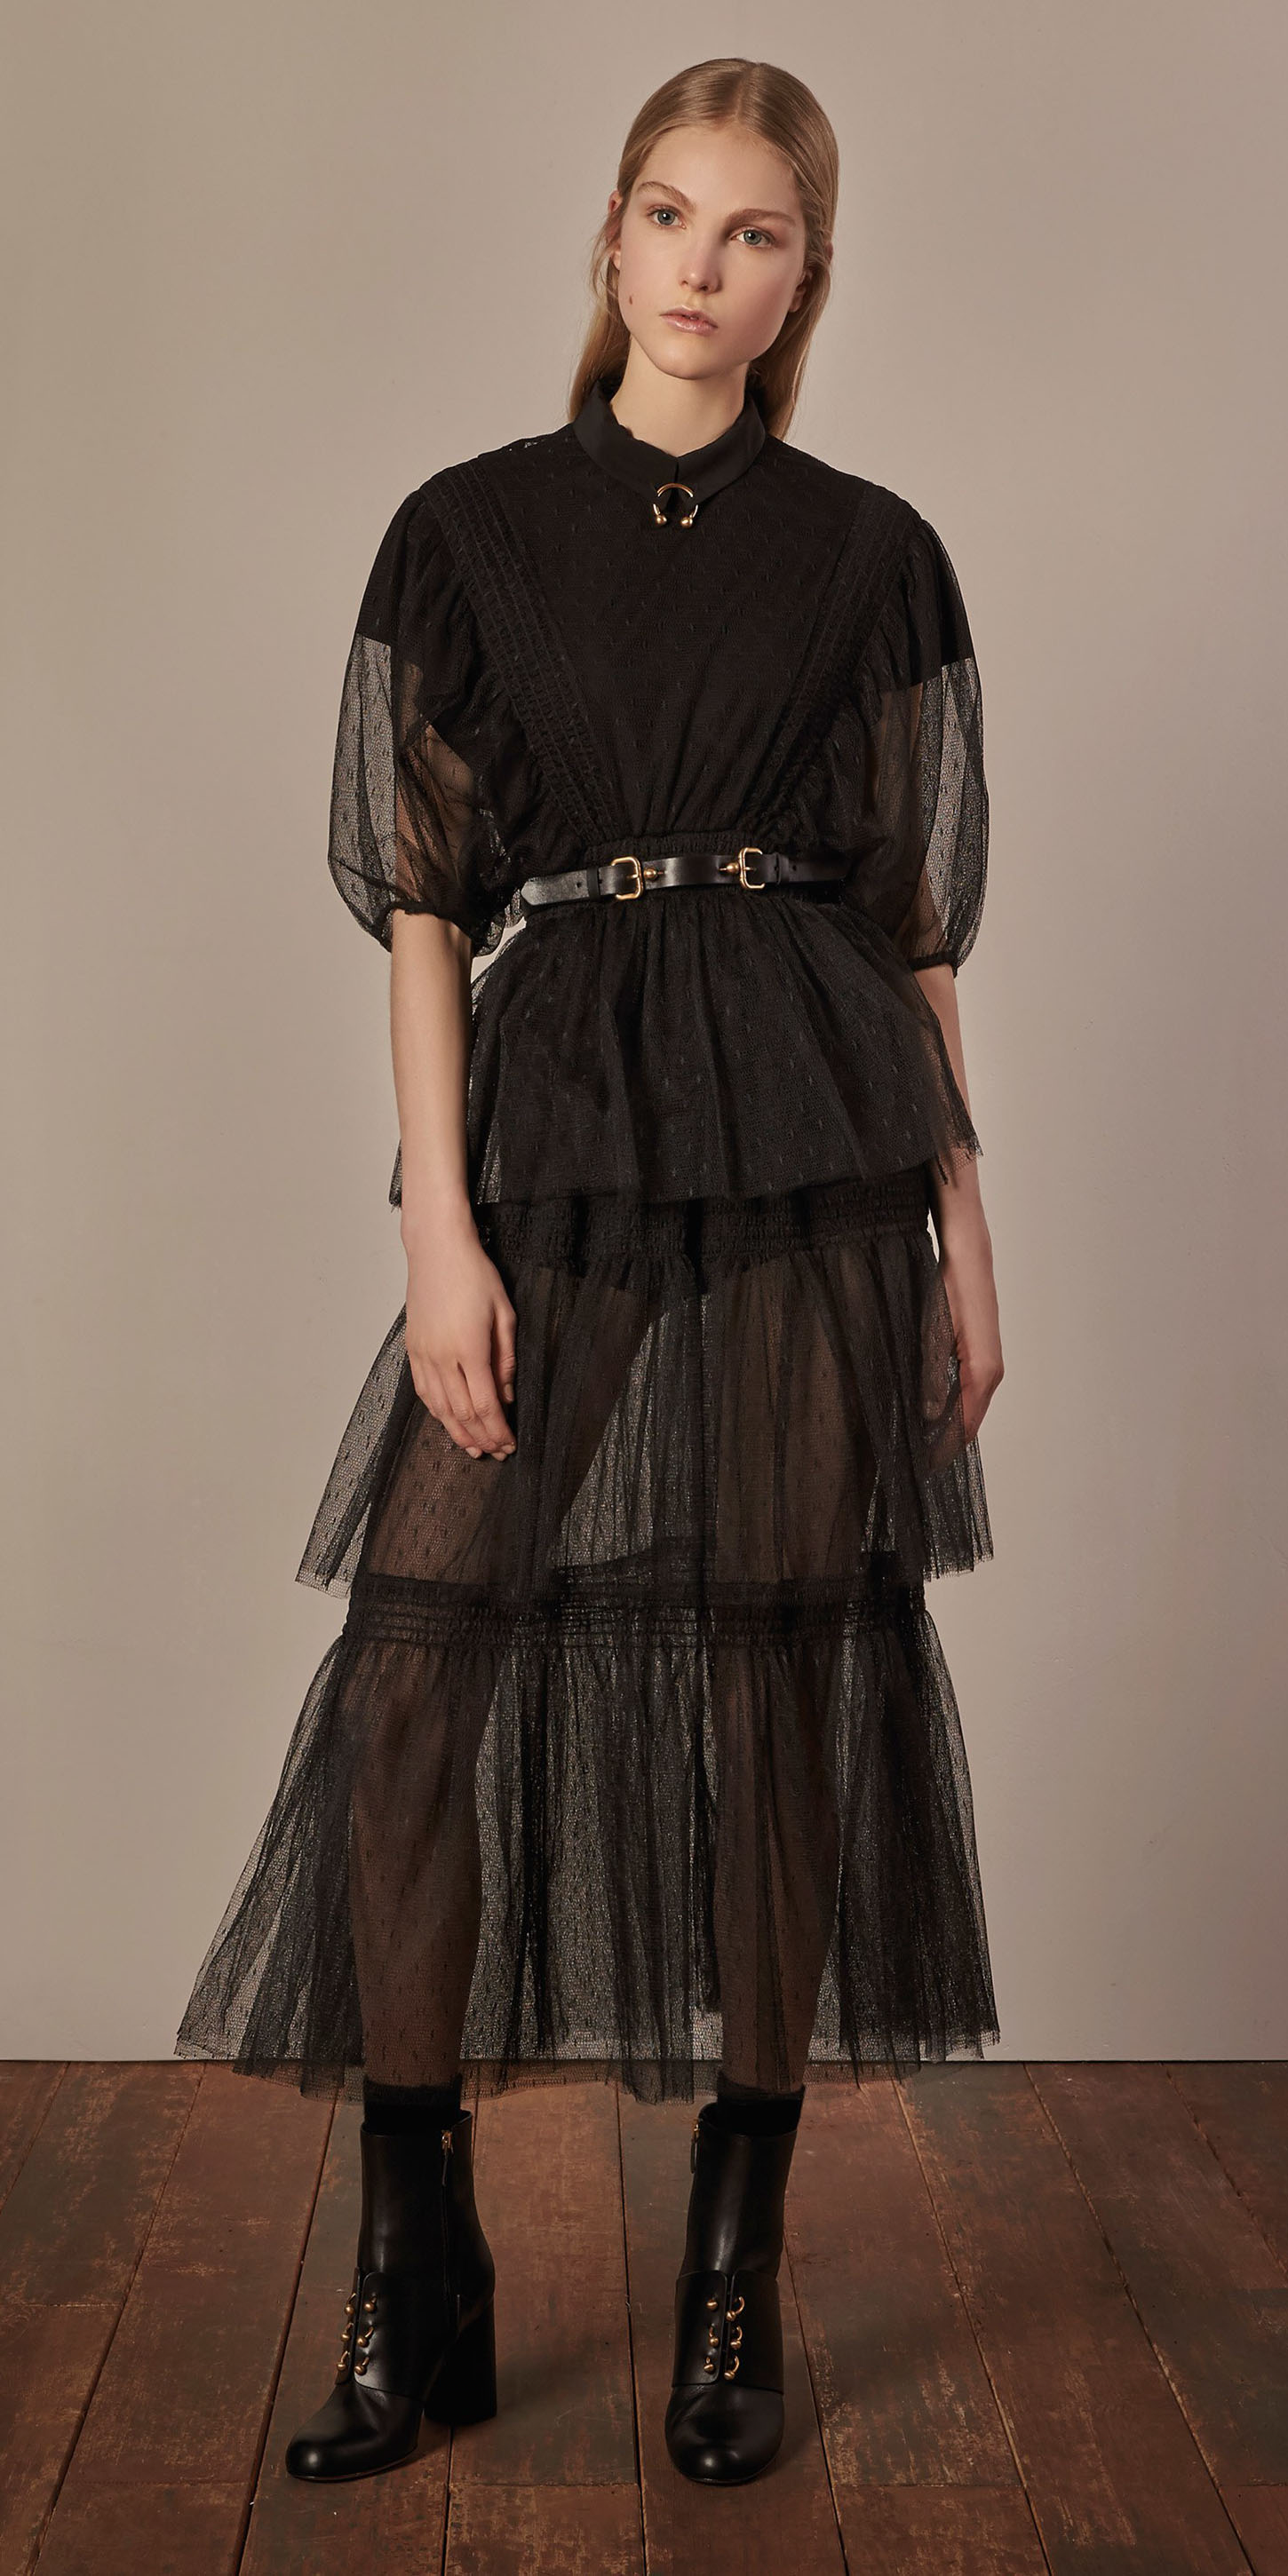 Black peasant dresses | HOWTOWEAR Fashion